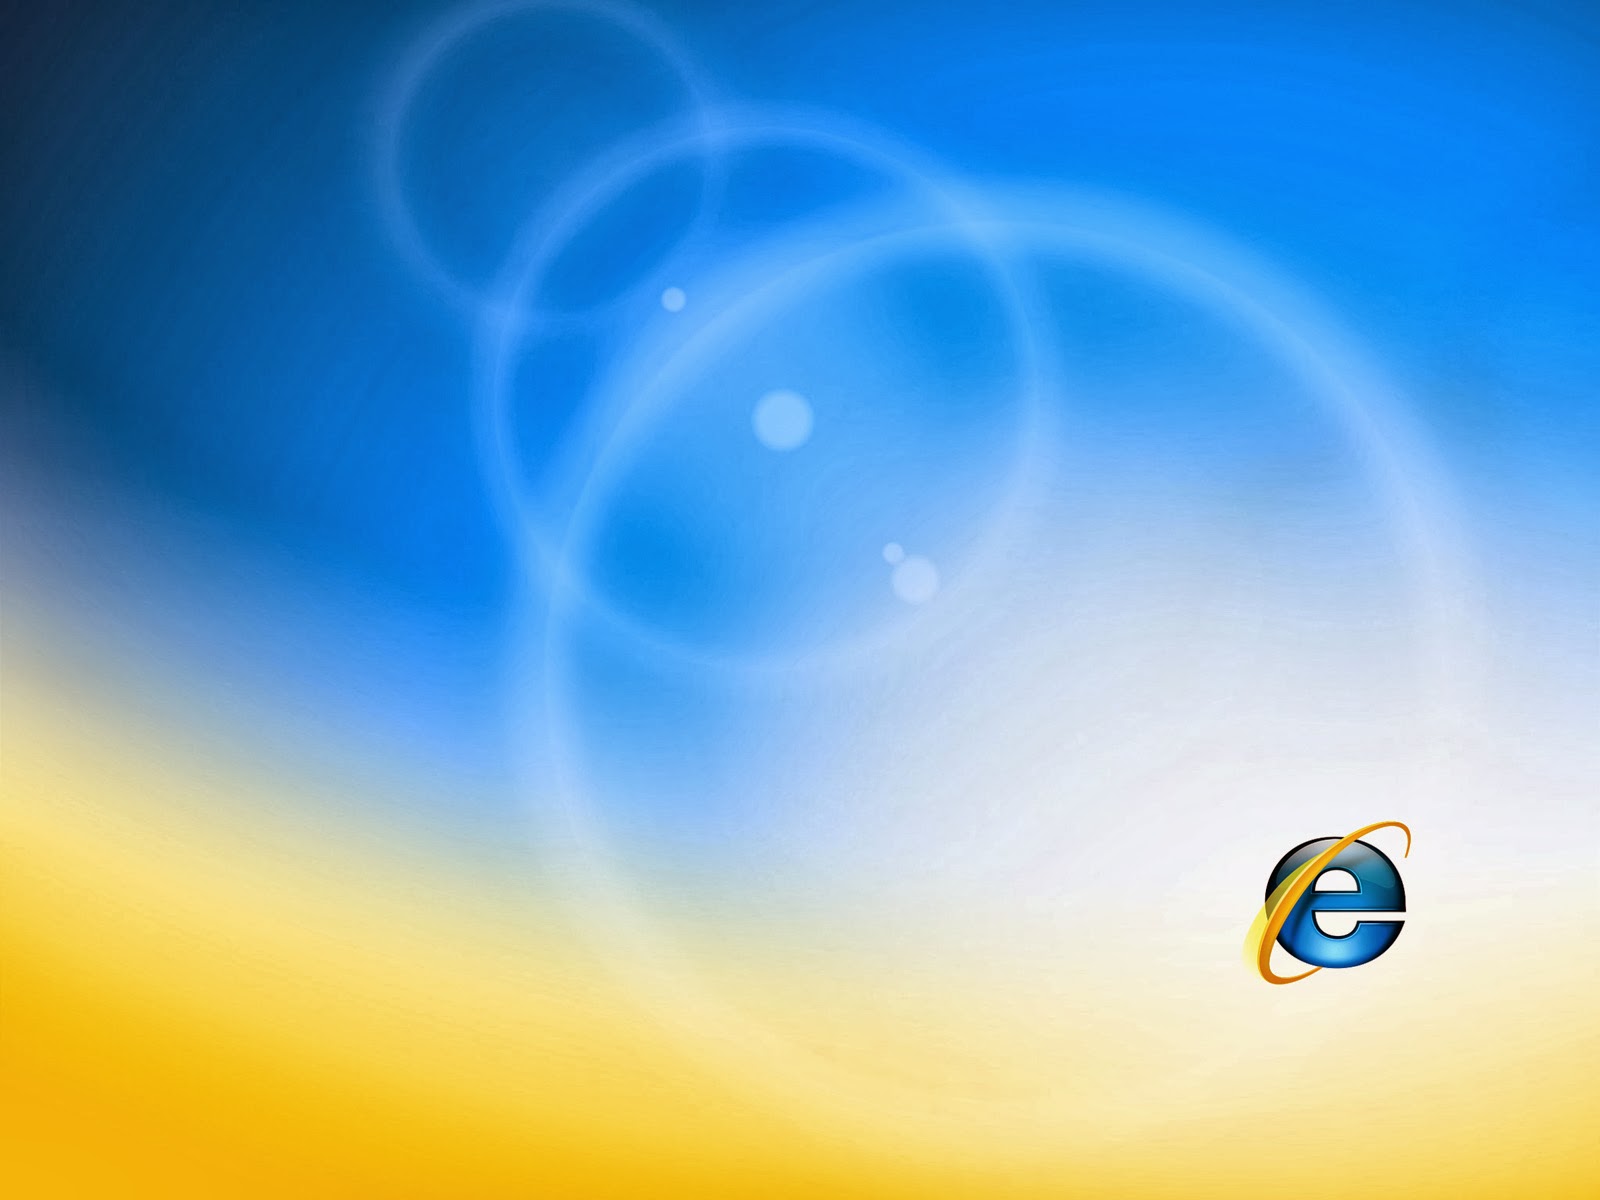 Internet Explorer Wallpaper - Top HD Wallpapers